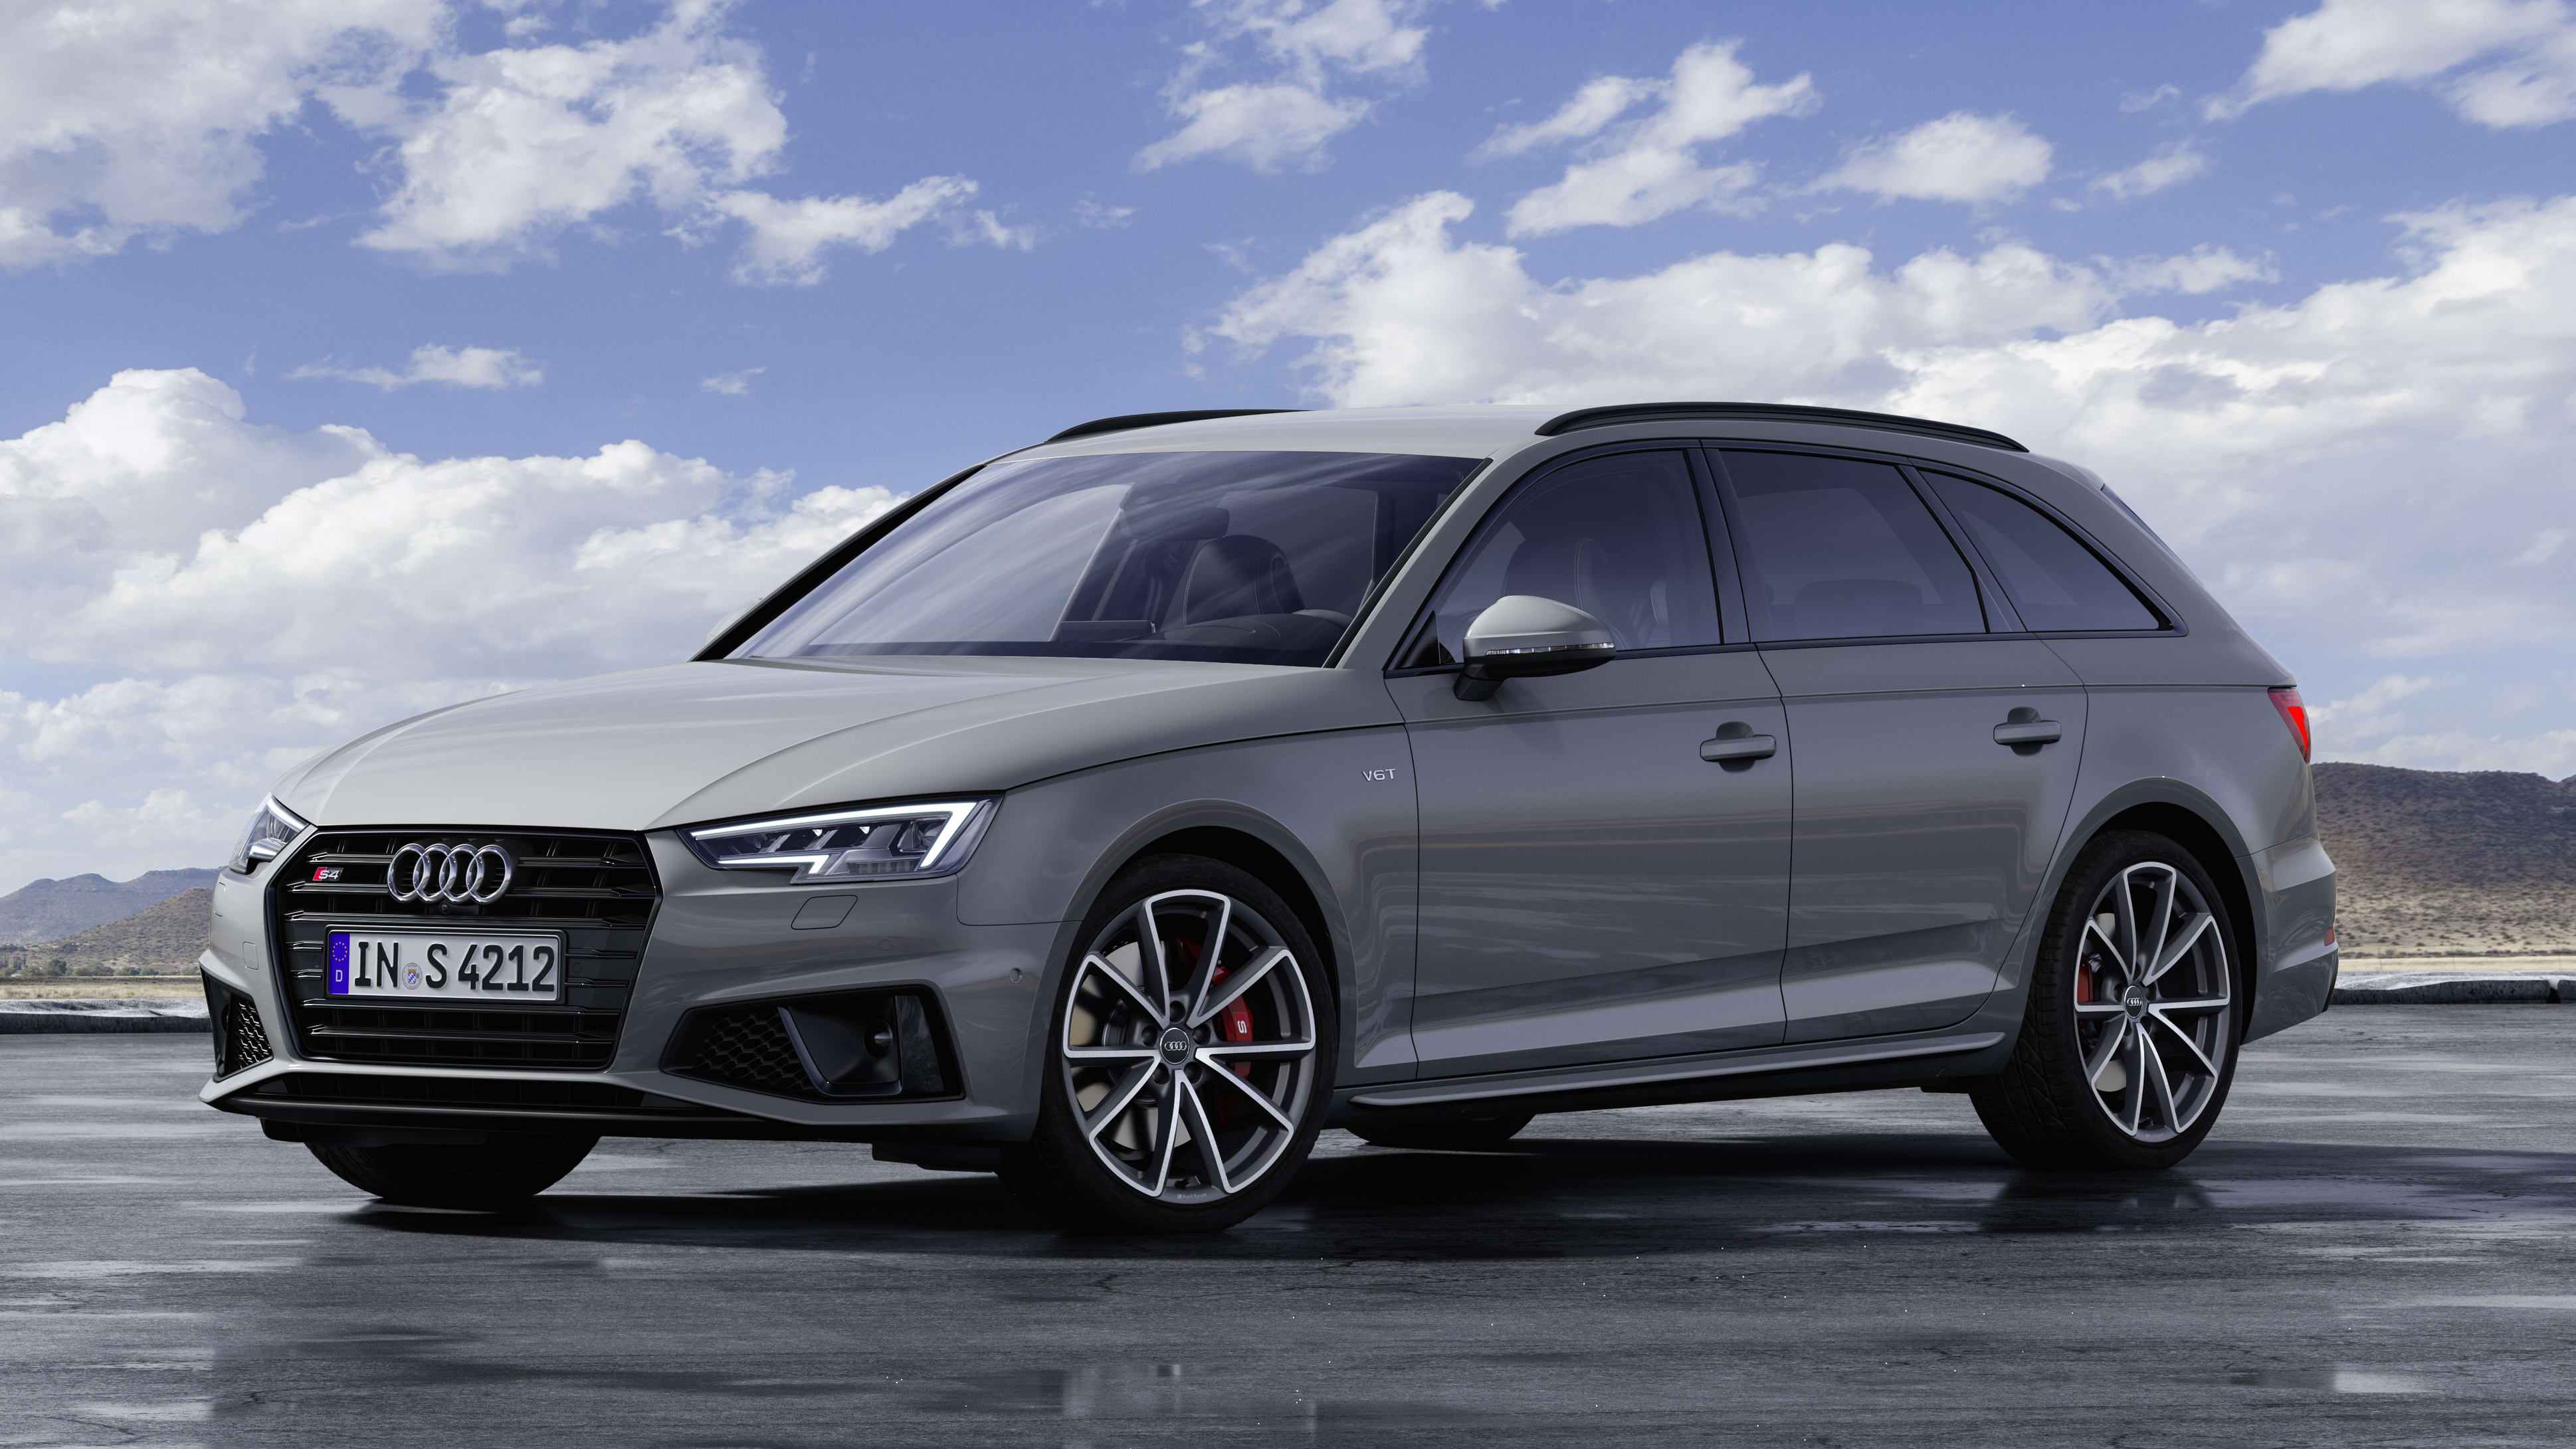 2019 Audi S4 TDI Revealed | Drive Car News